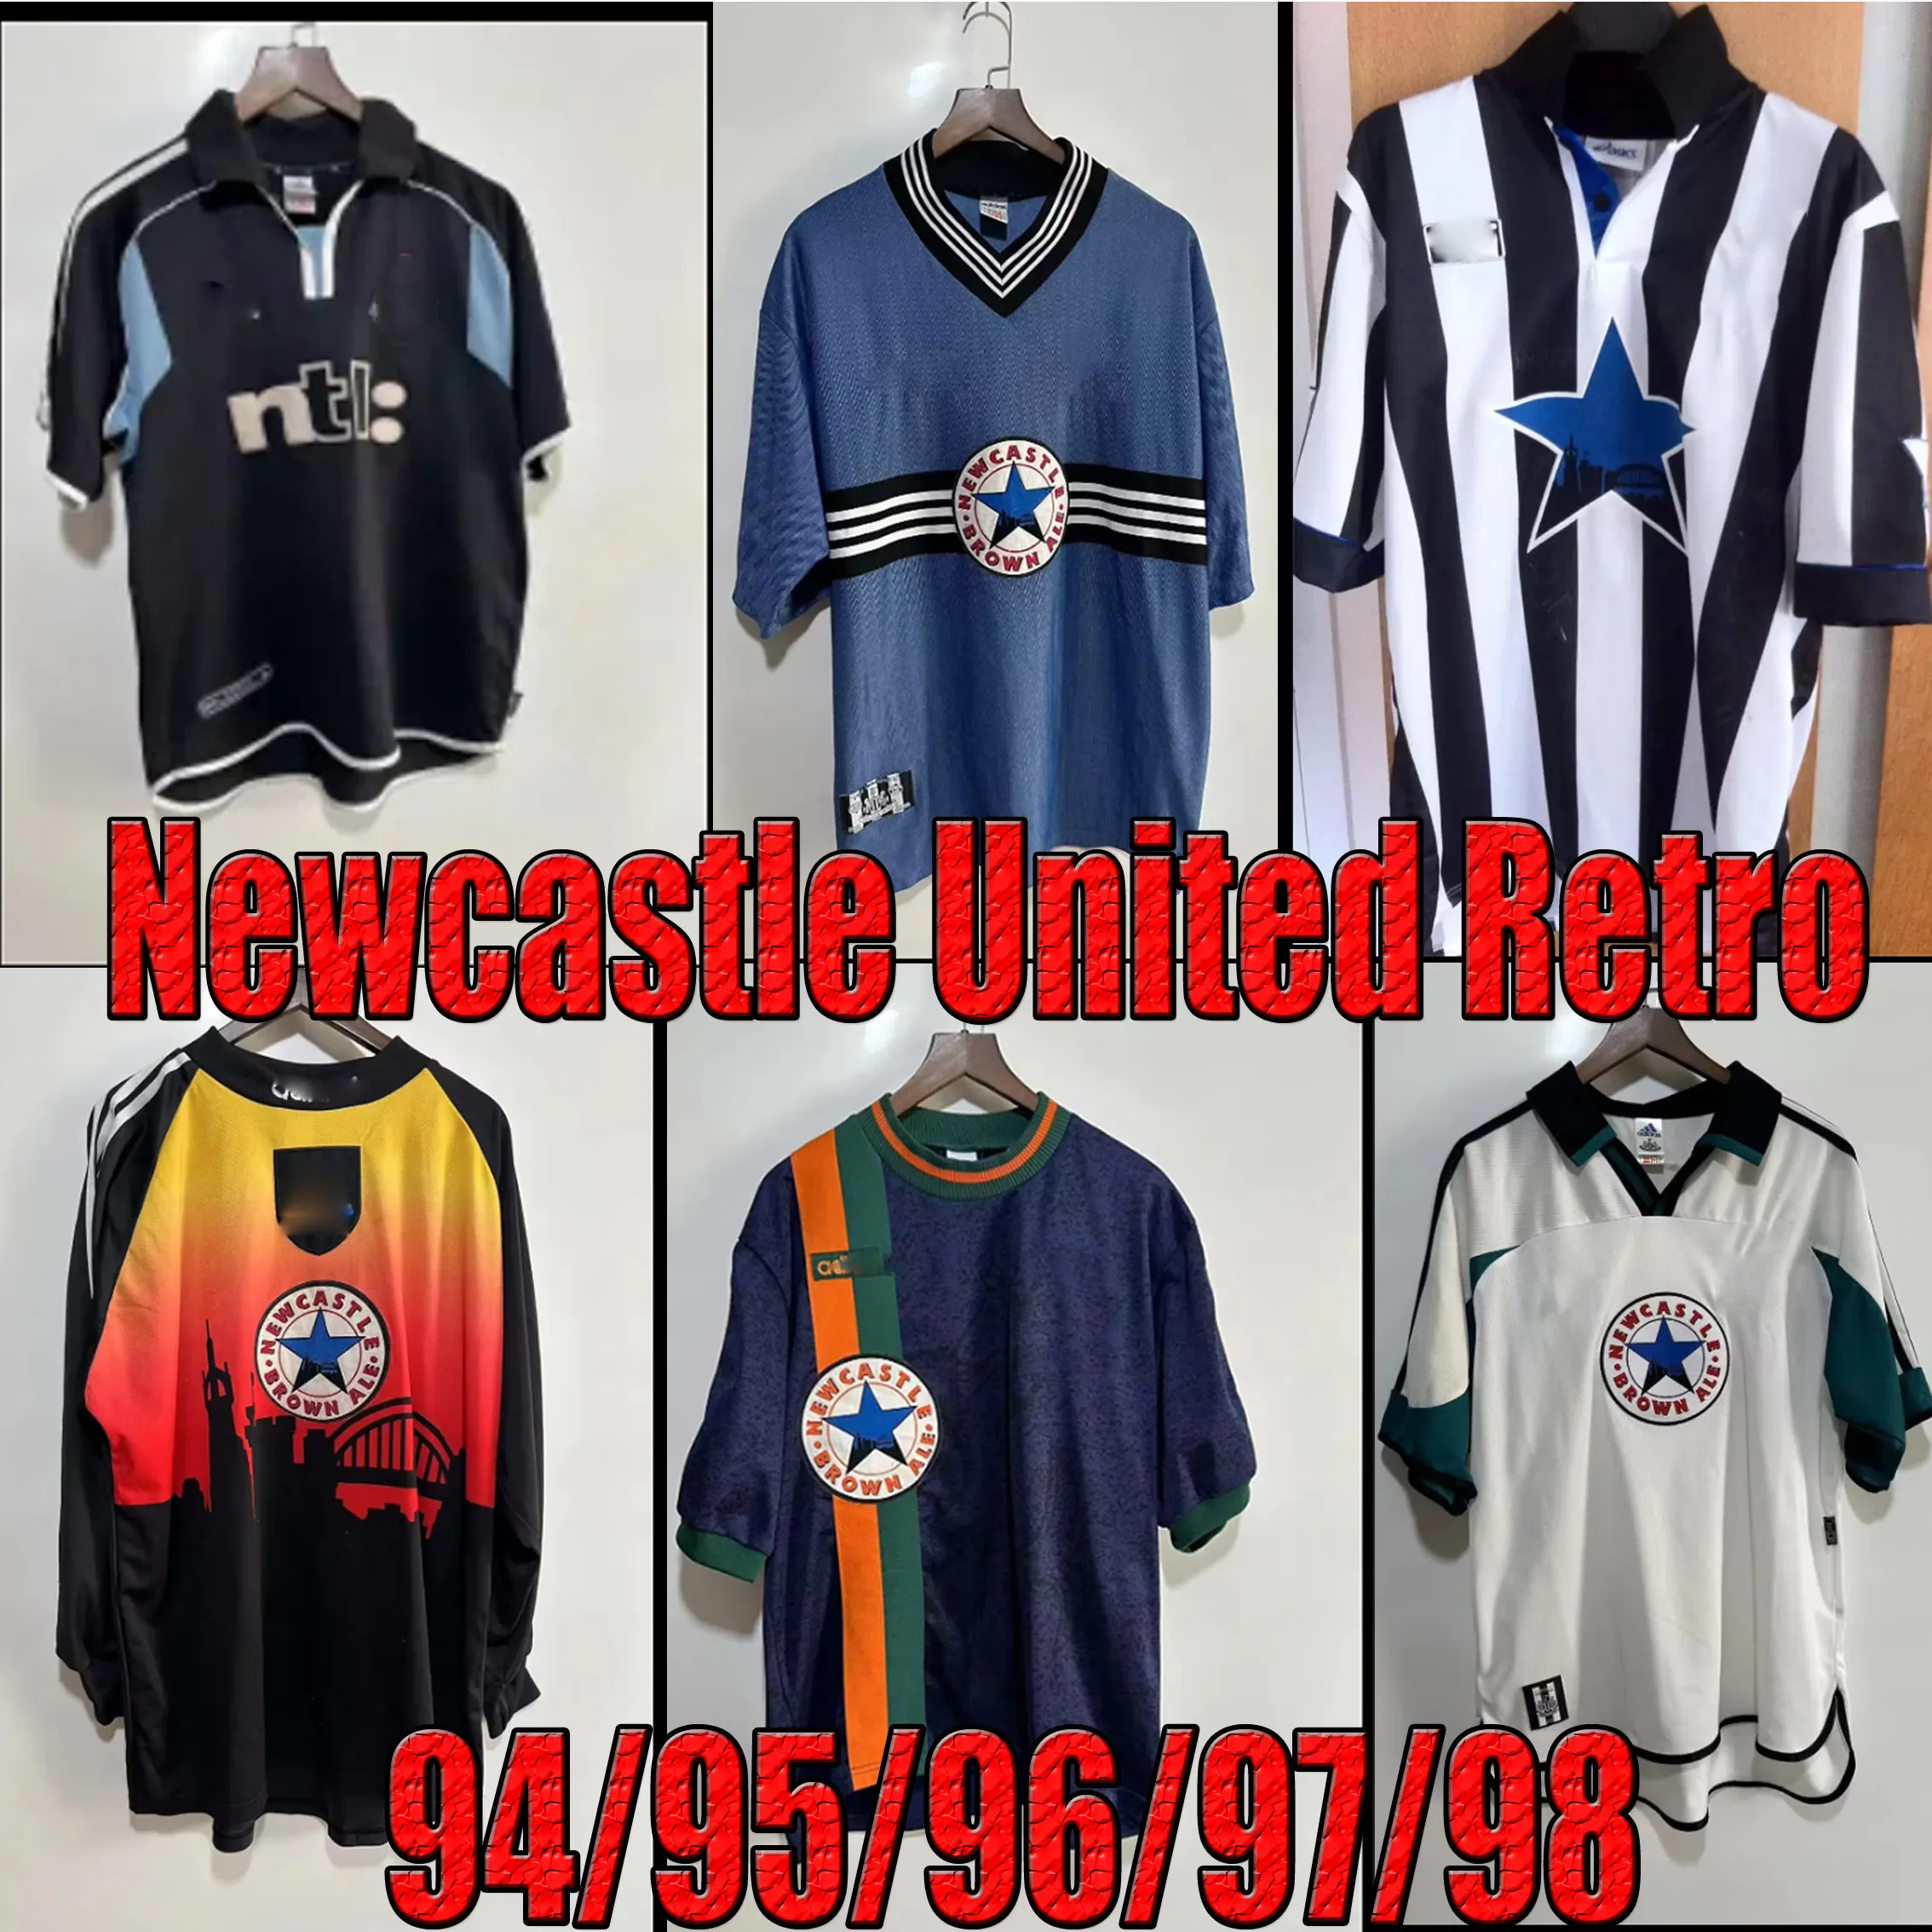 Shearer 1996 1997 Shirt Away Retro 97 98 Home Away Gk1 Pinas Barnes Owen 93-95 Classic Football Shirts Cole 2000/01 Vintage Shirts